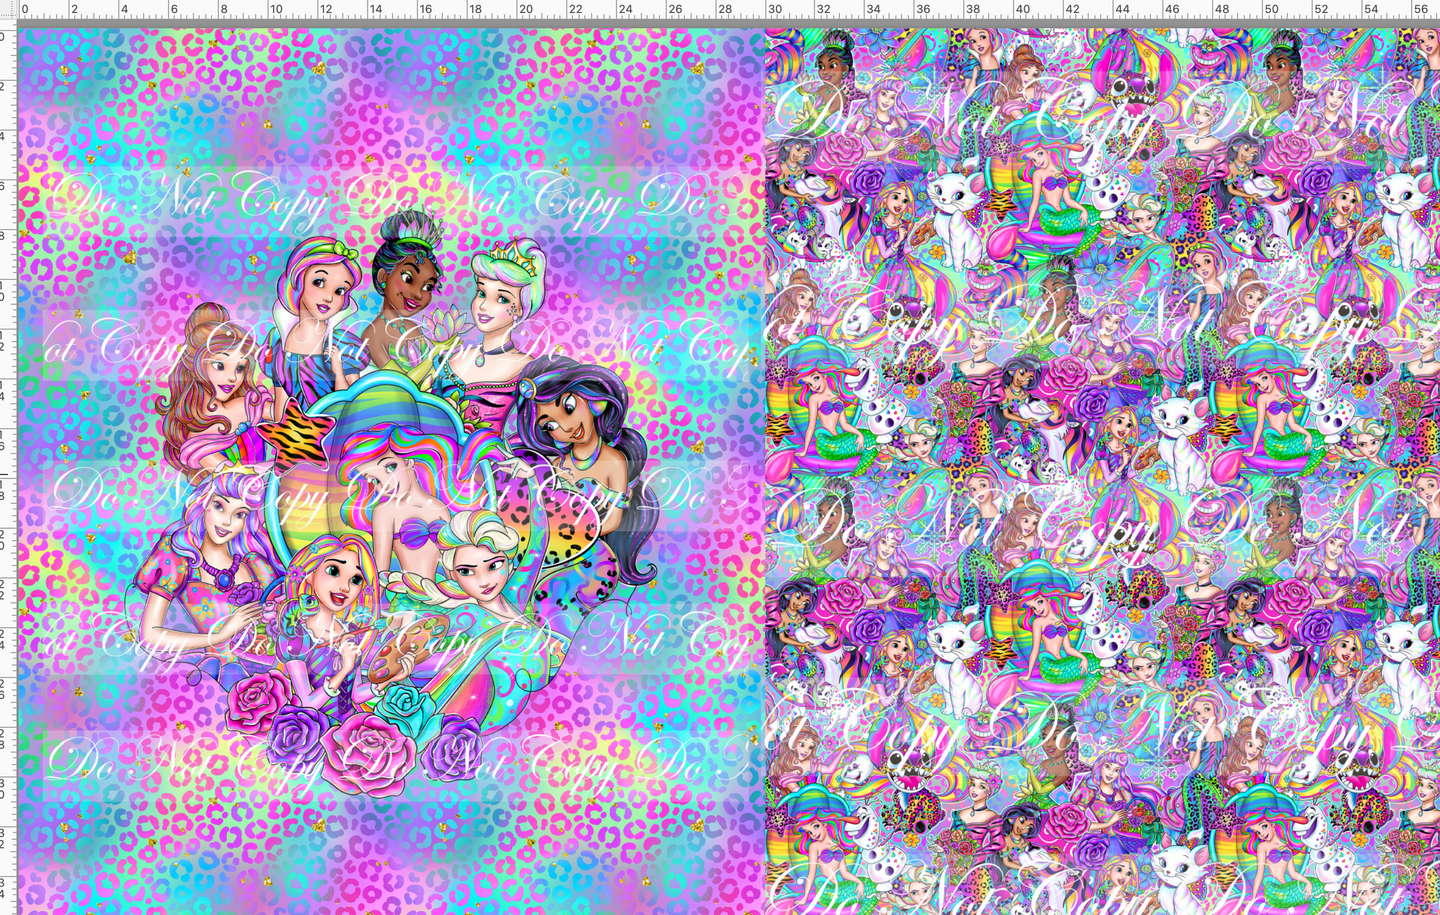 CATALOG - PREORDER R74 - LF Princesses - Toddler Blanket Topper